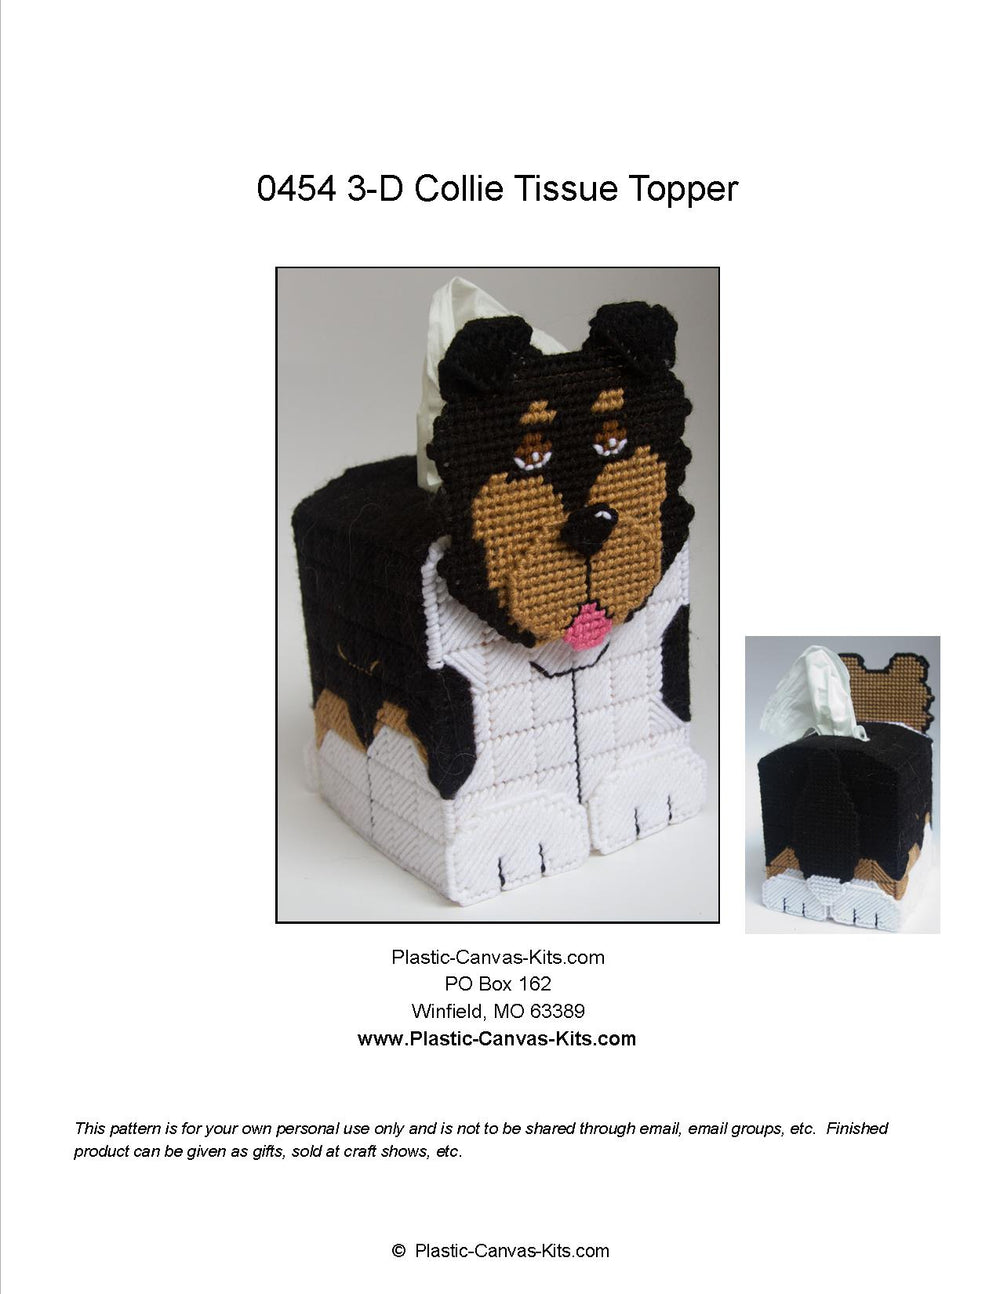 Collie 3-D Tissue Topper